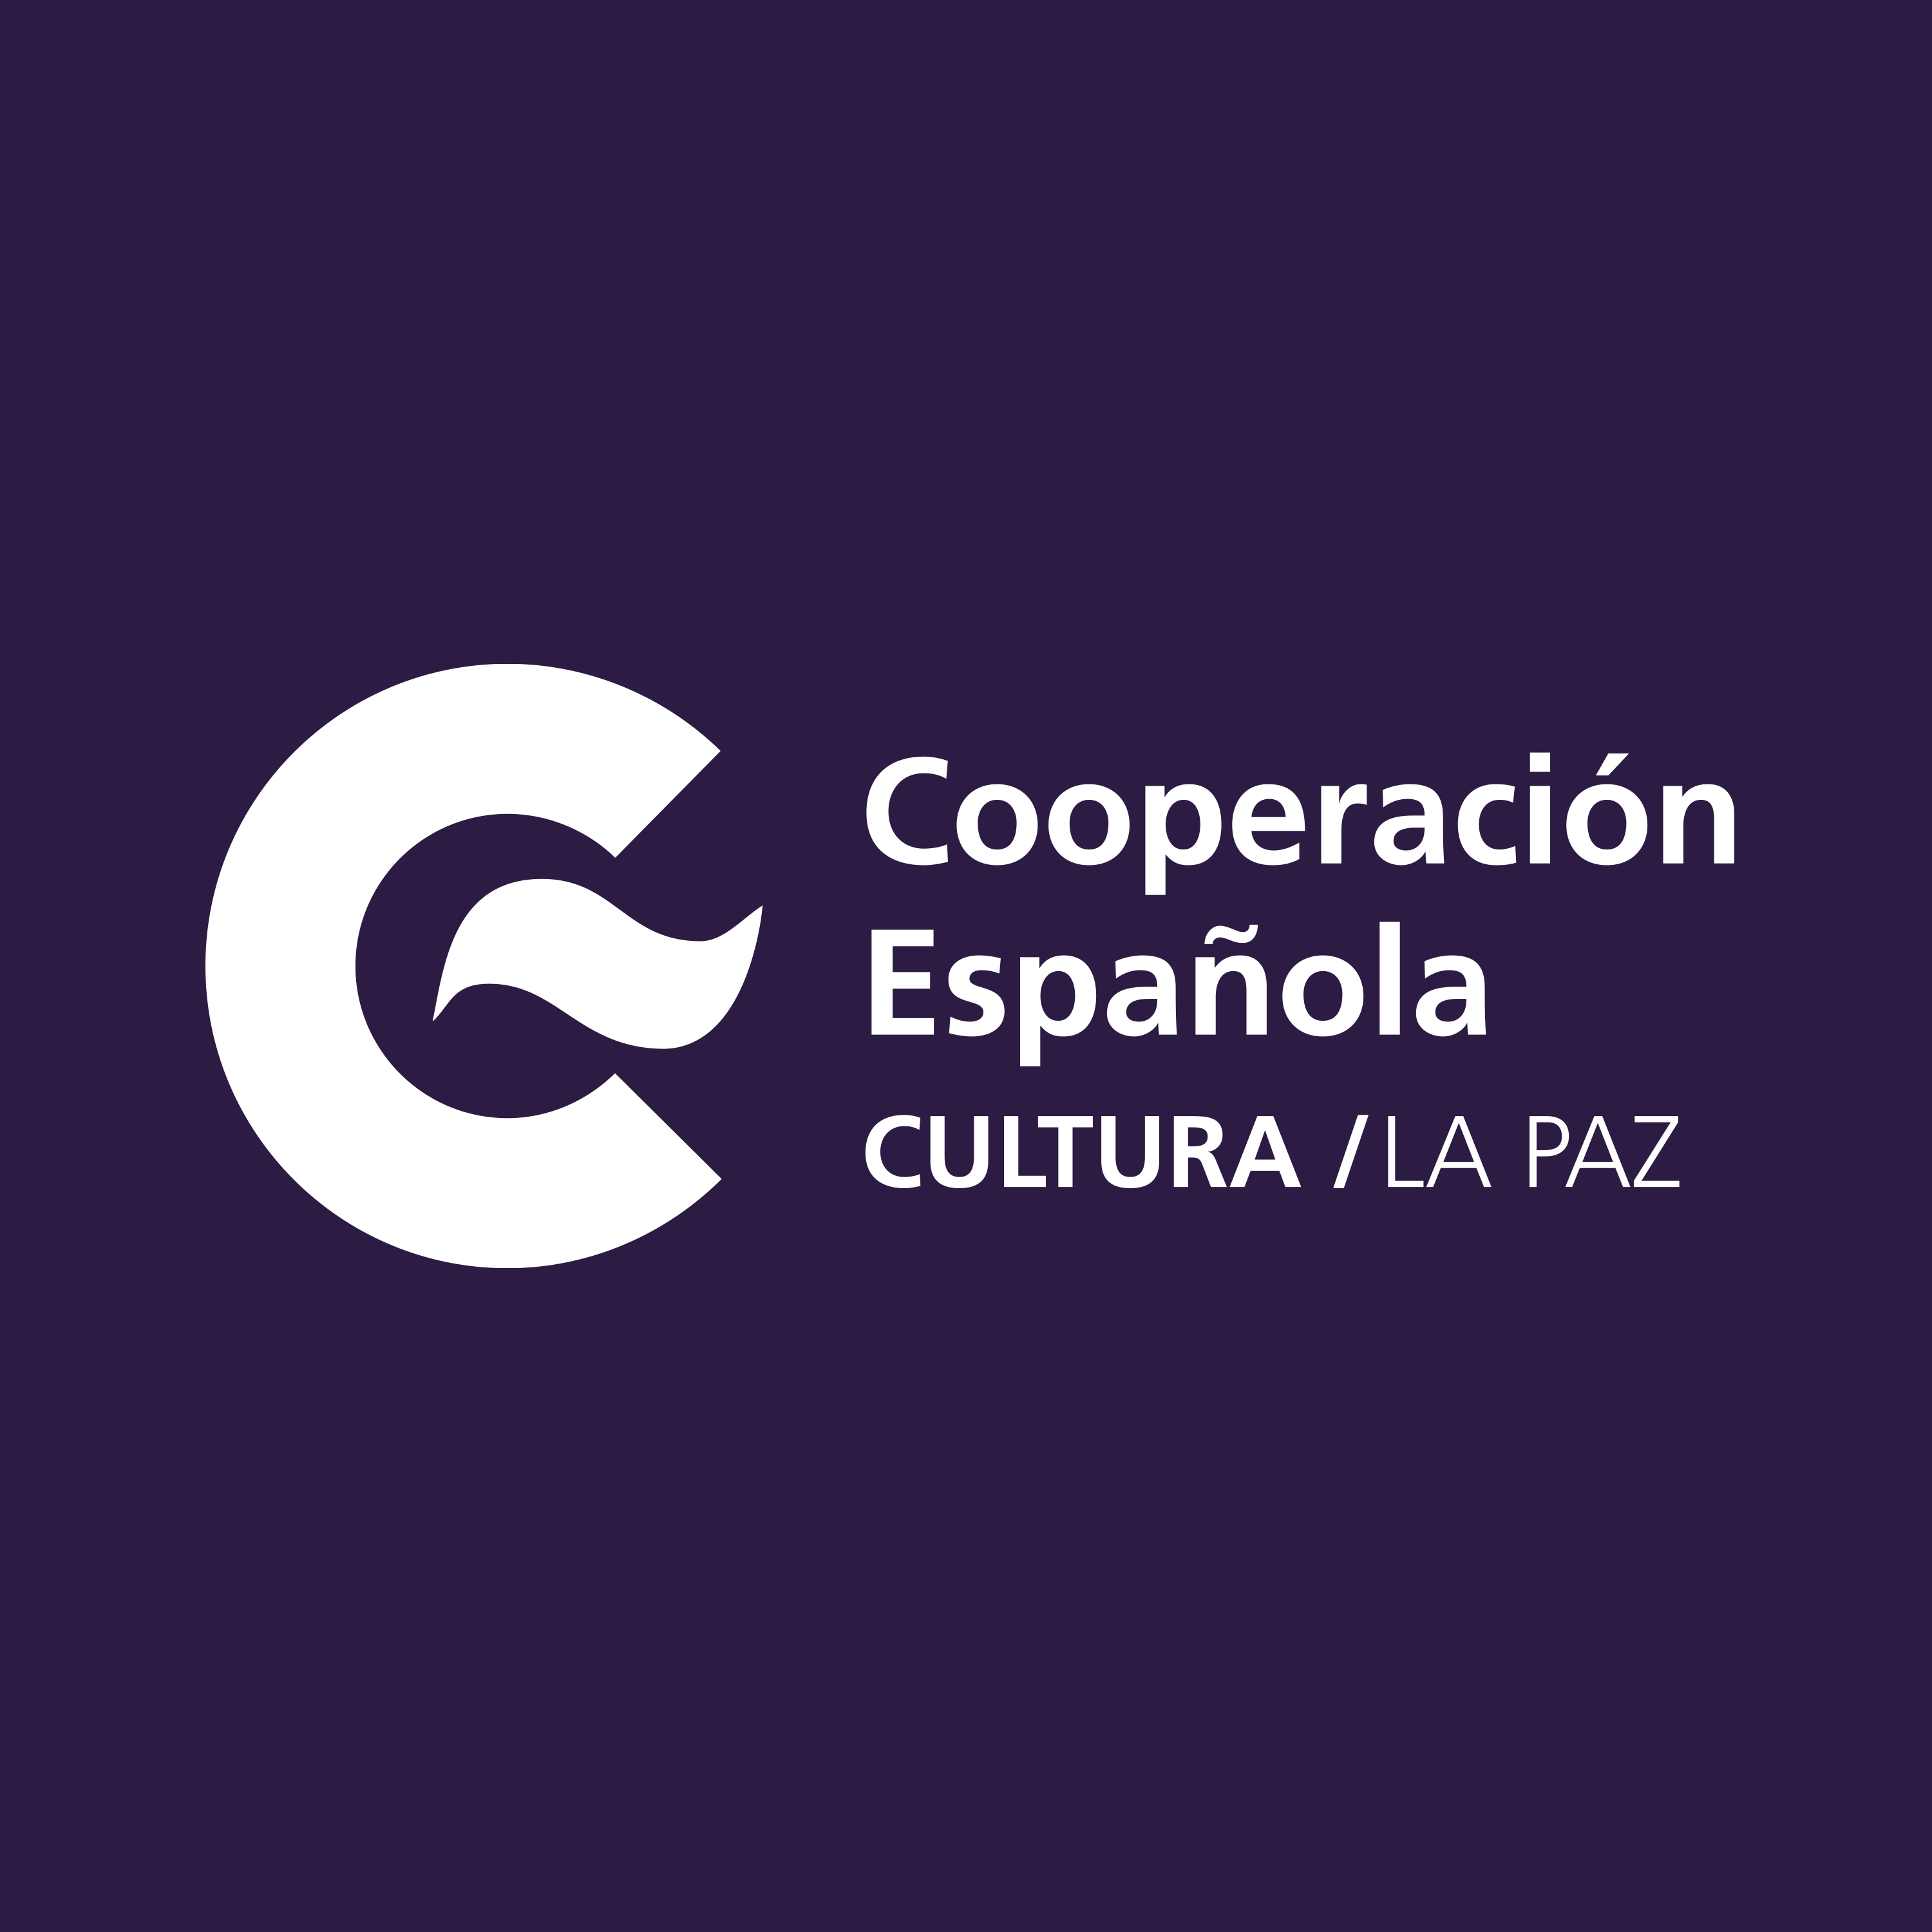 COOPERACION ESPAÑOLA